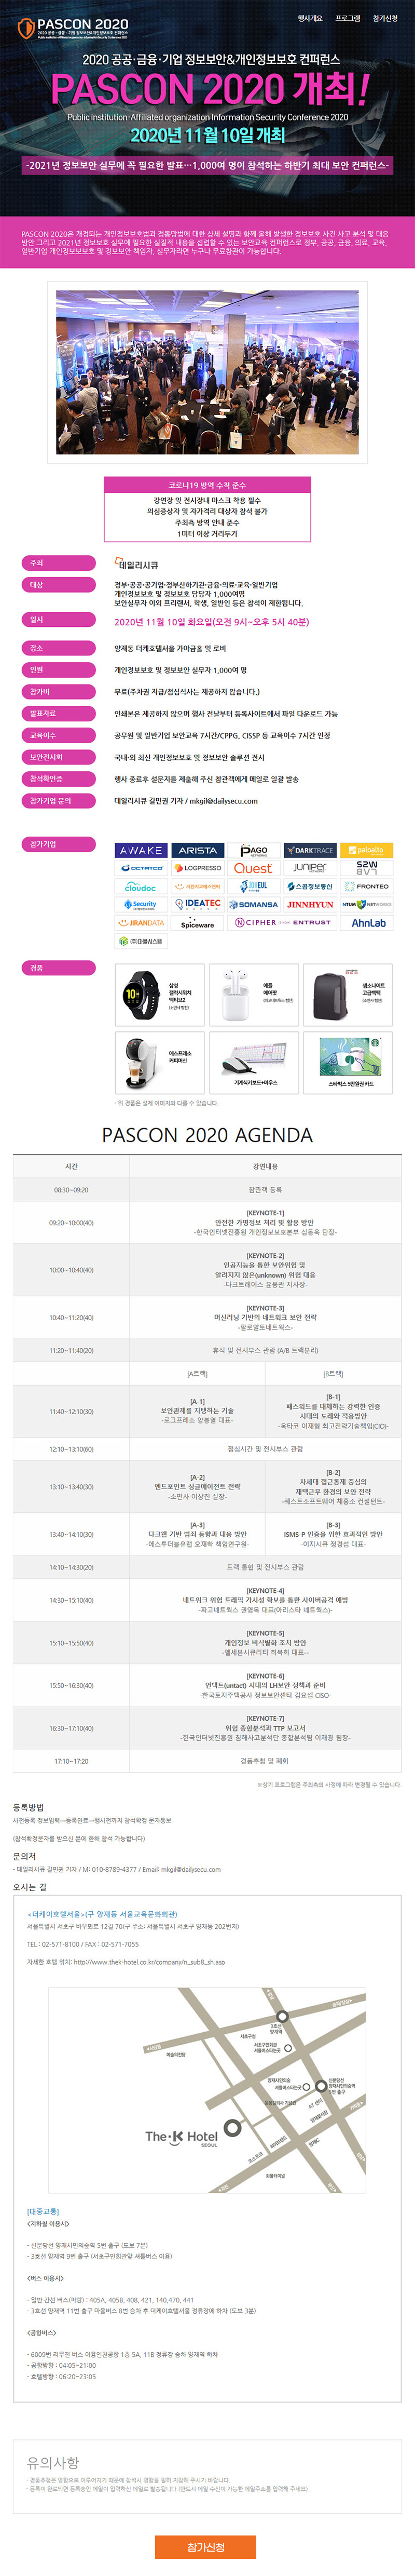 PASCON2020_edm_201102.jpg